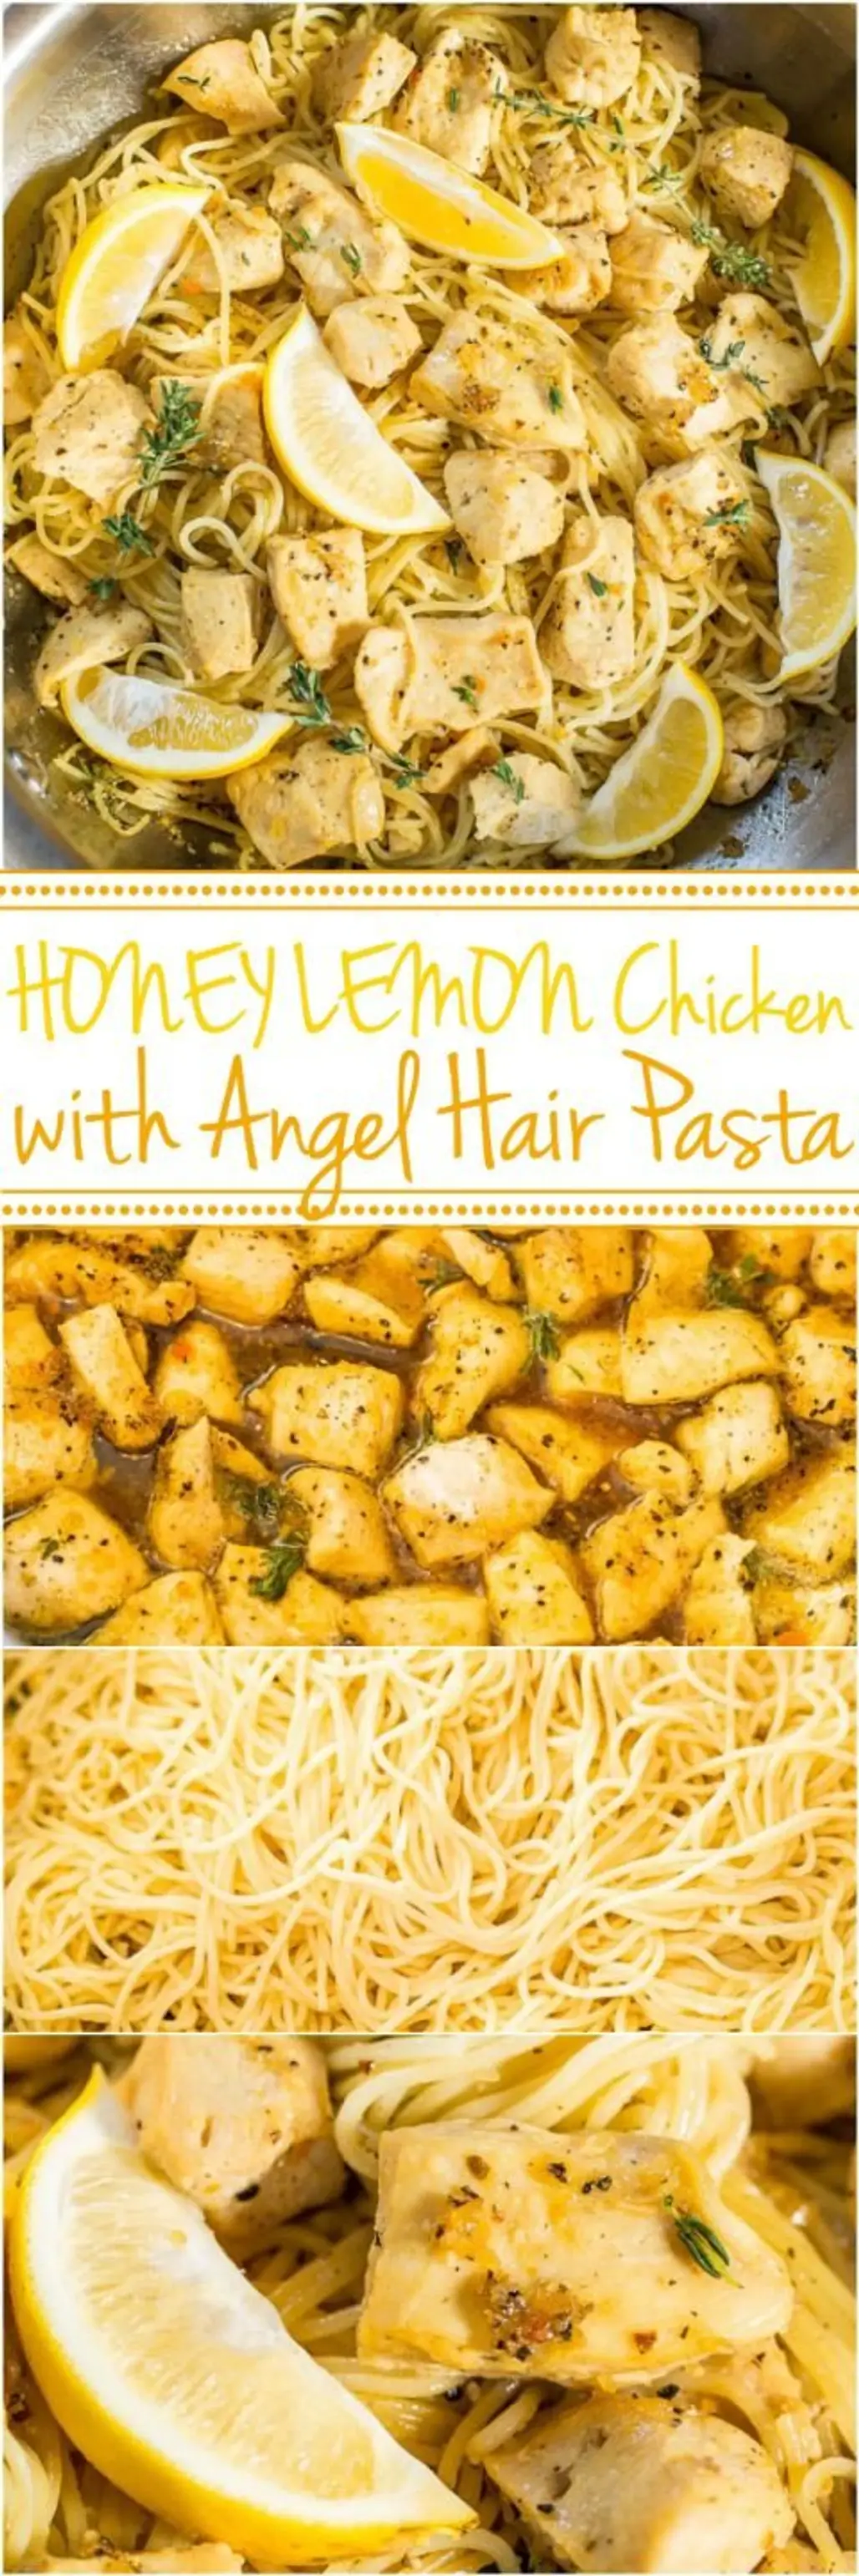 Honey Lemon Chicken with Angel Hair Pasta